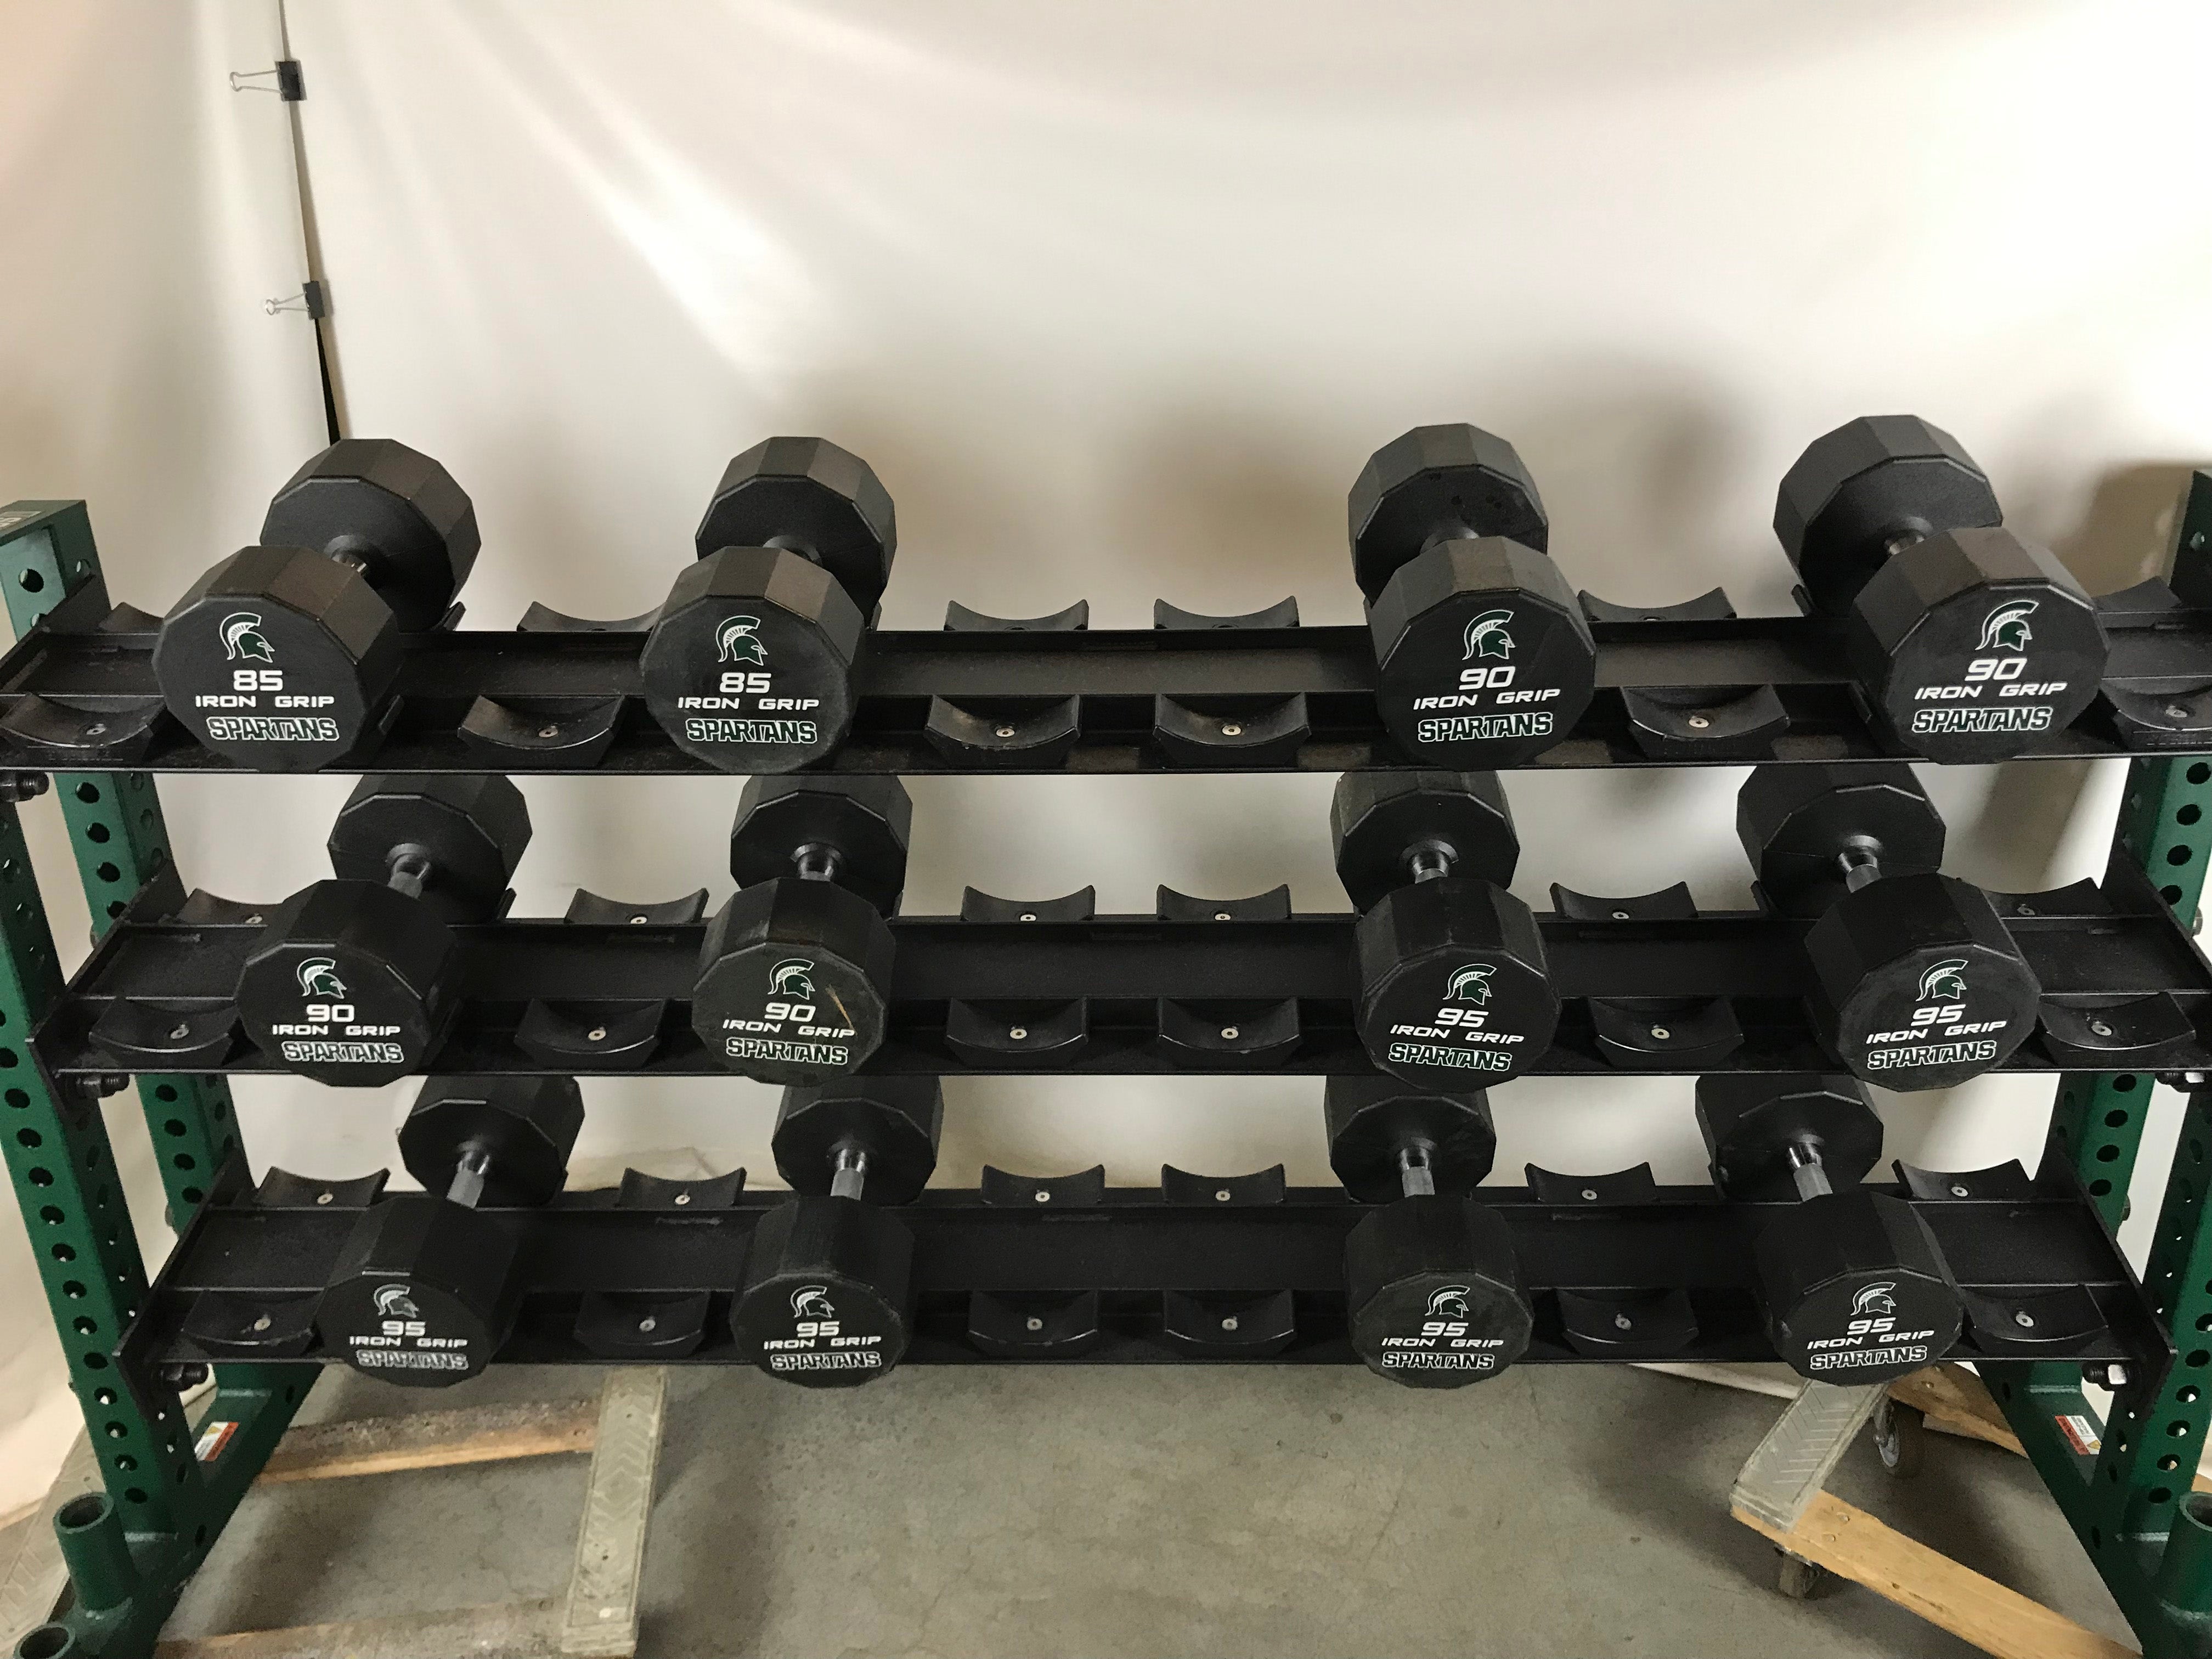 Sorinex Dumbbell Rack with Iron Grip Dumbbell Set